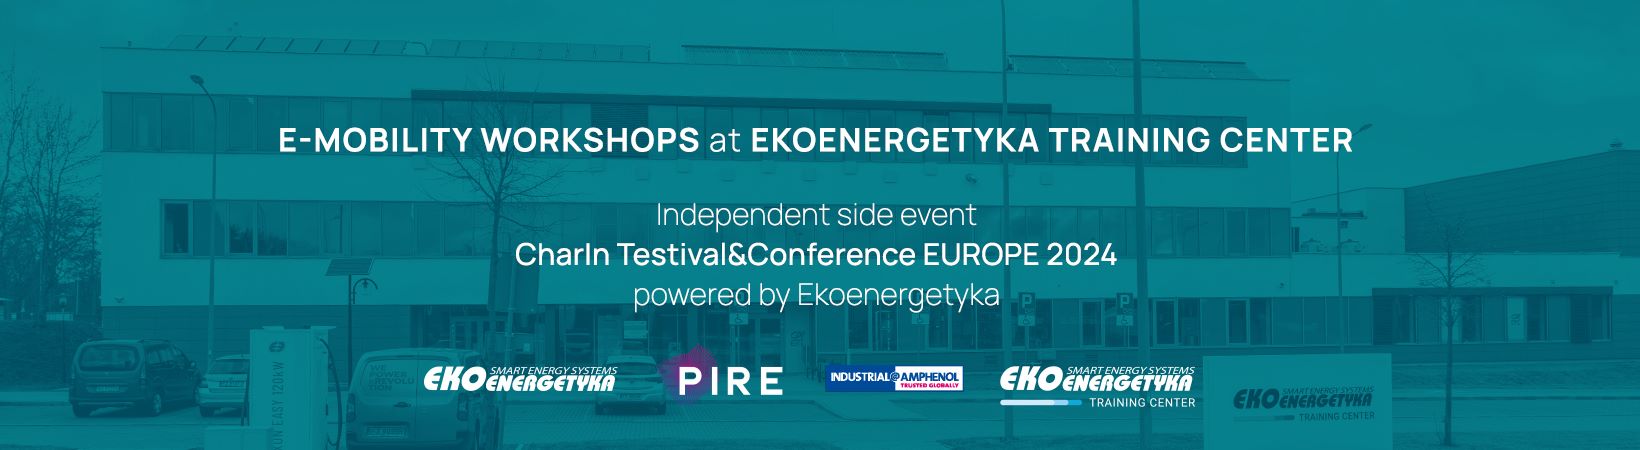 E-MOBILITY WORKSHOPS at EKOENERGETYKA TRAINING CENTER, Ekoenergetyka